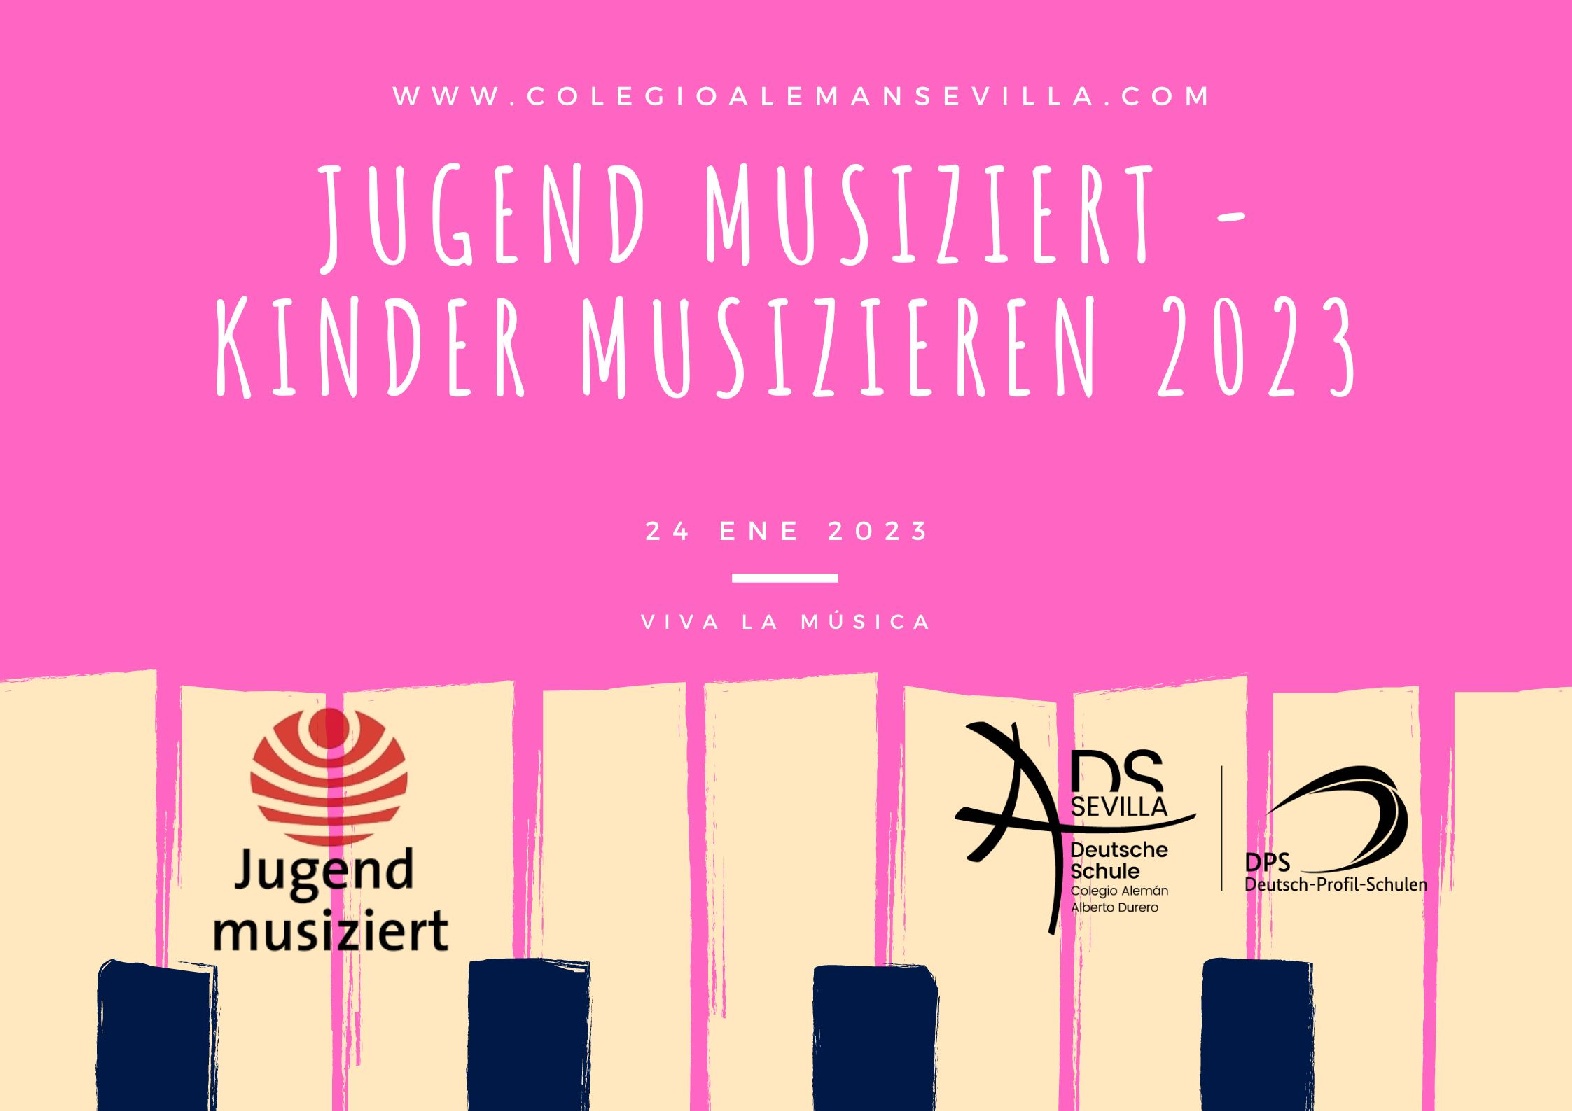 Kinder musizieren/Jugend musiziert 2023